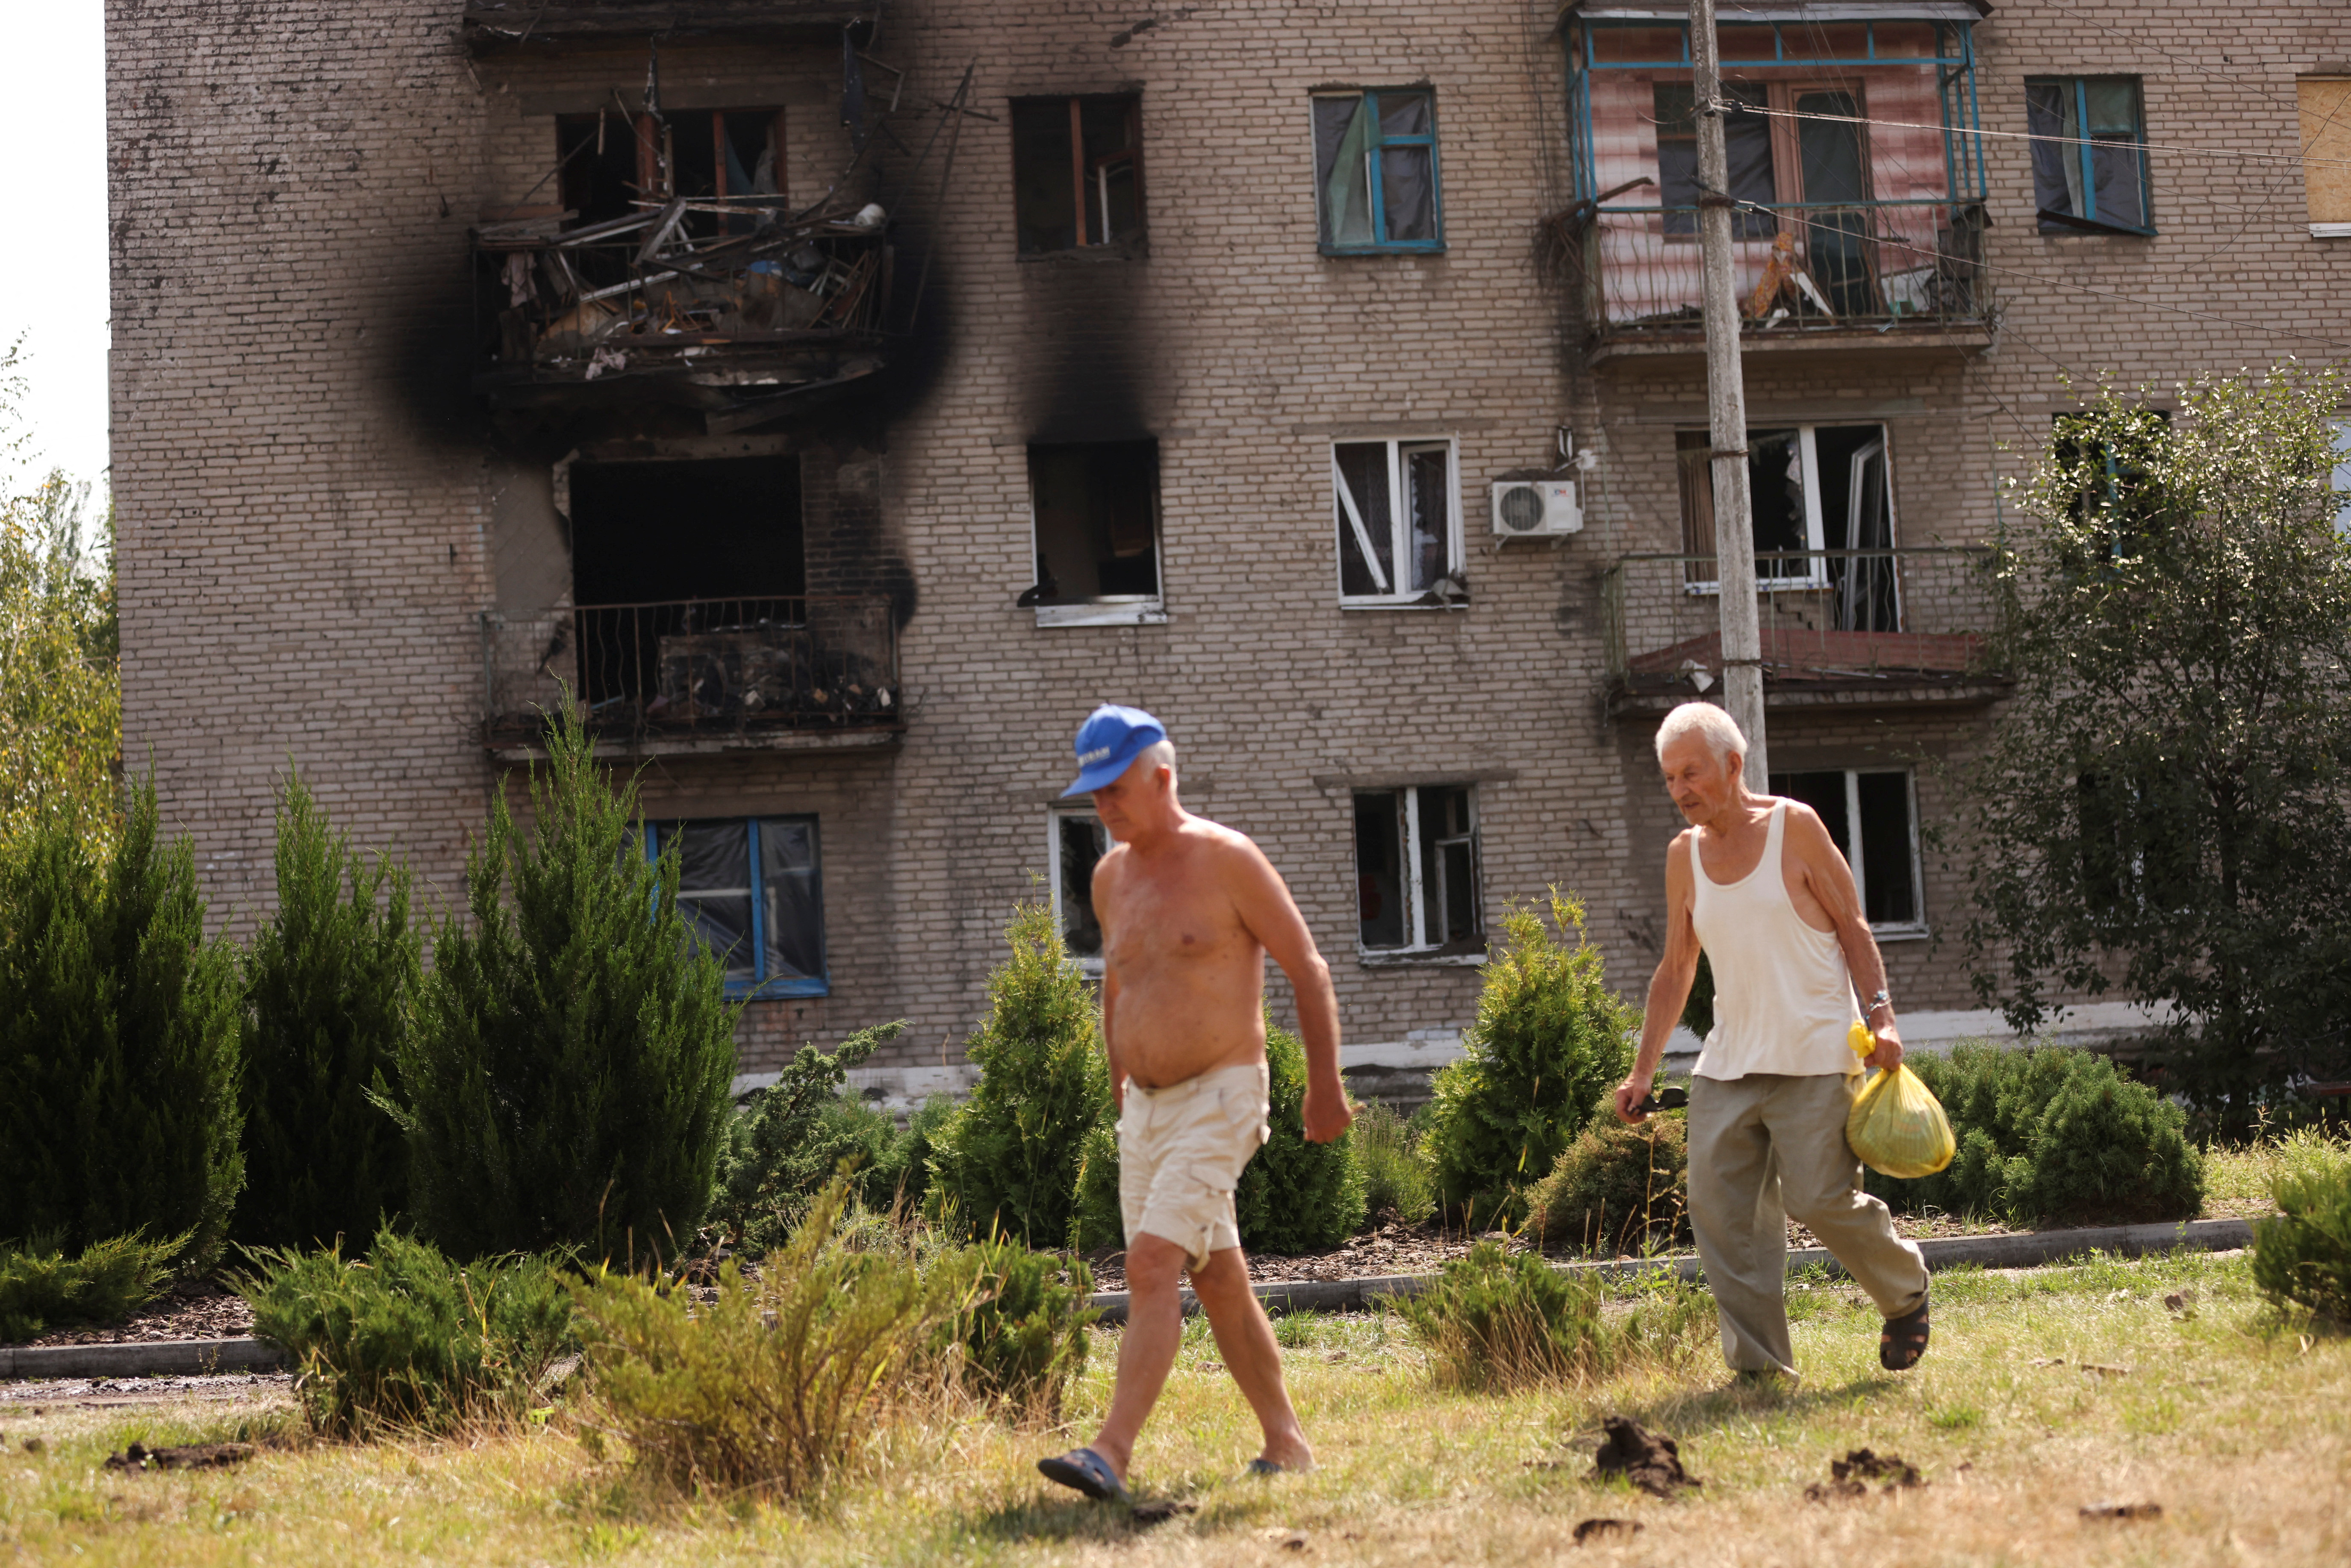 Ukrainian men walk in front of damaged houses following recent Russian shelling in the city of Slovyansk